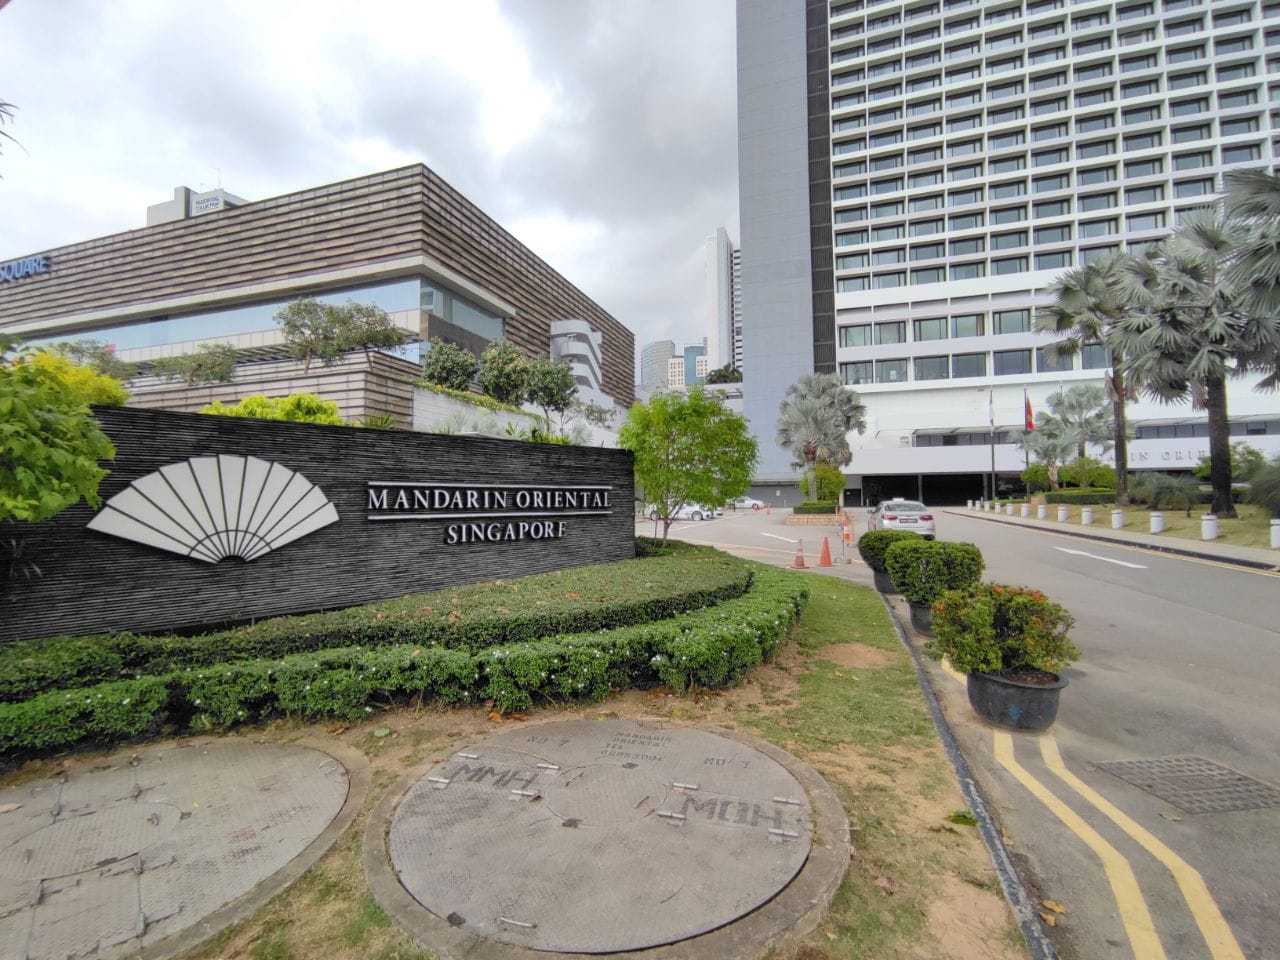 Mandarin Oriental Singapore Driveway Entrance